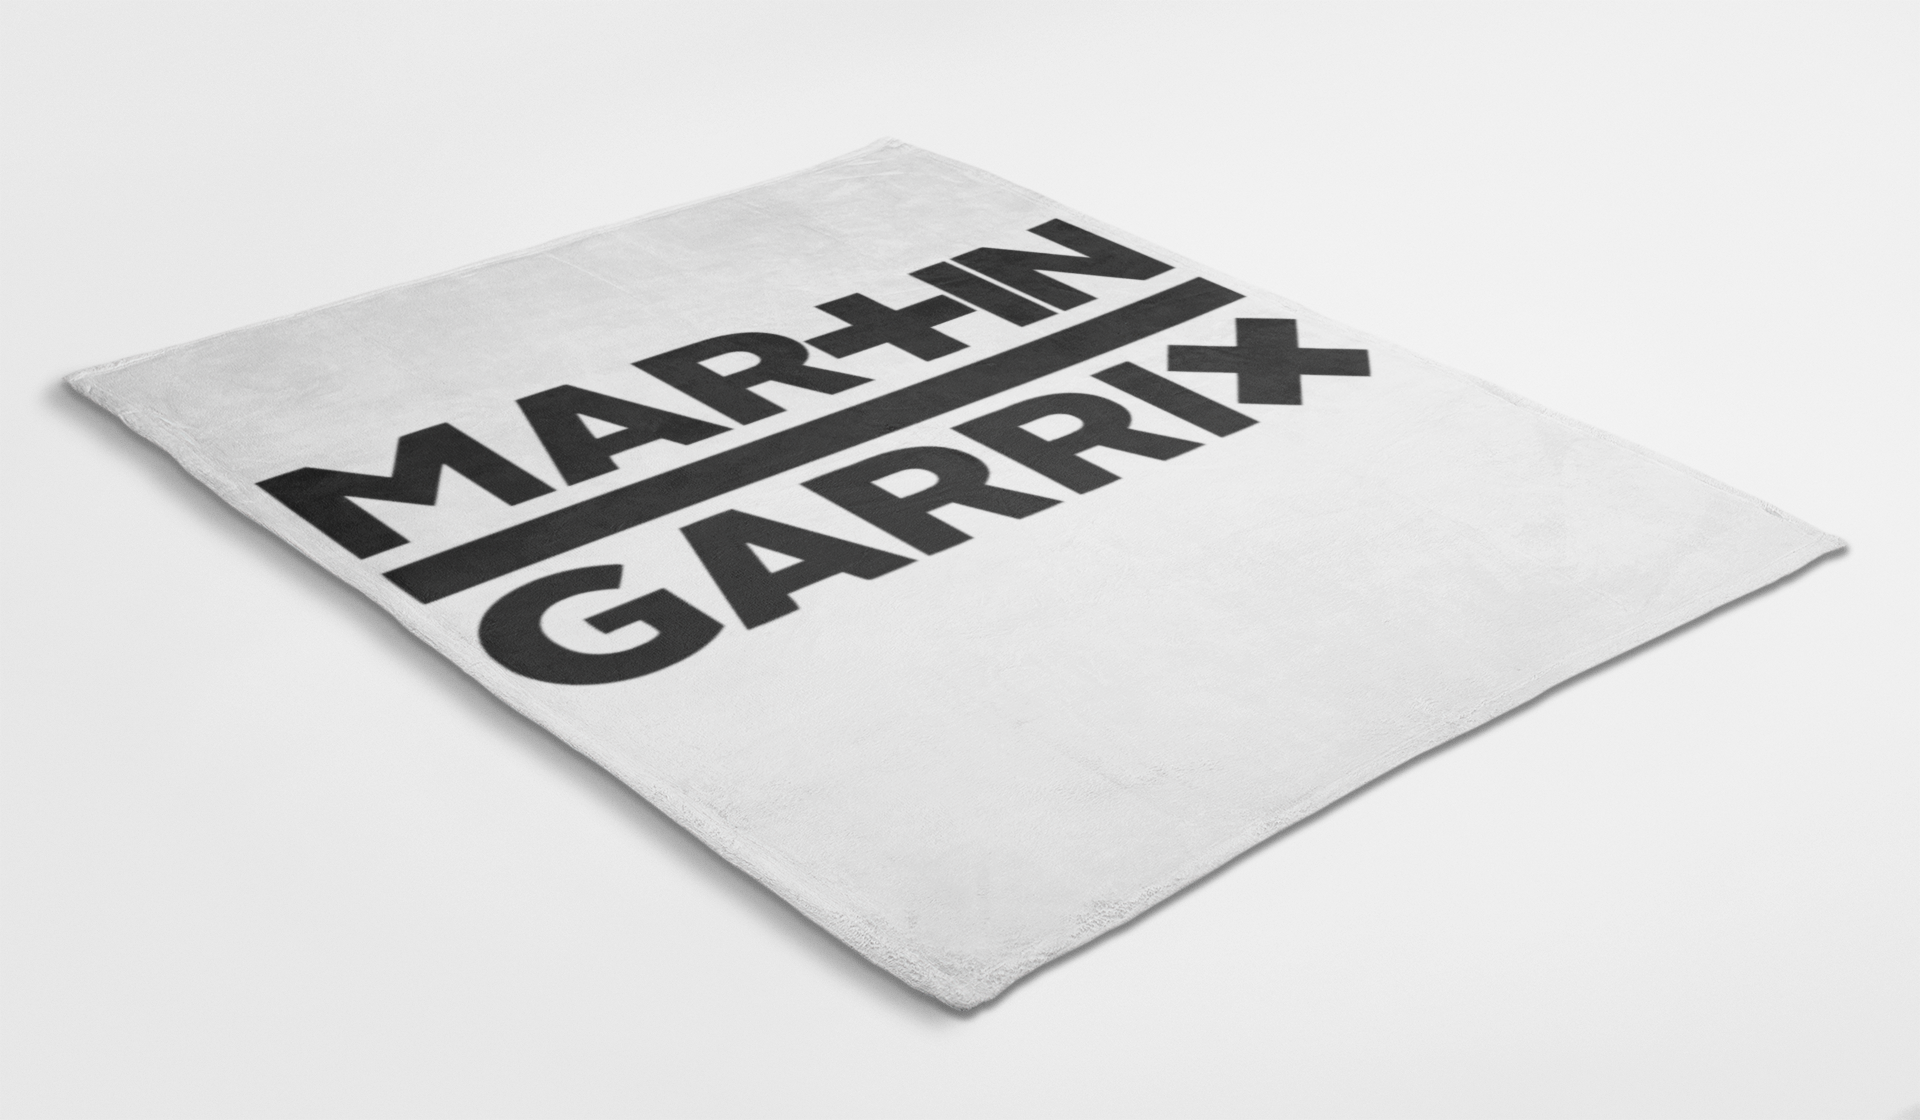 DJ Martin Garrix logo Blanket